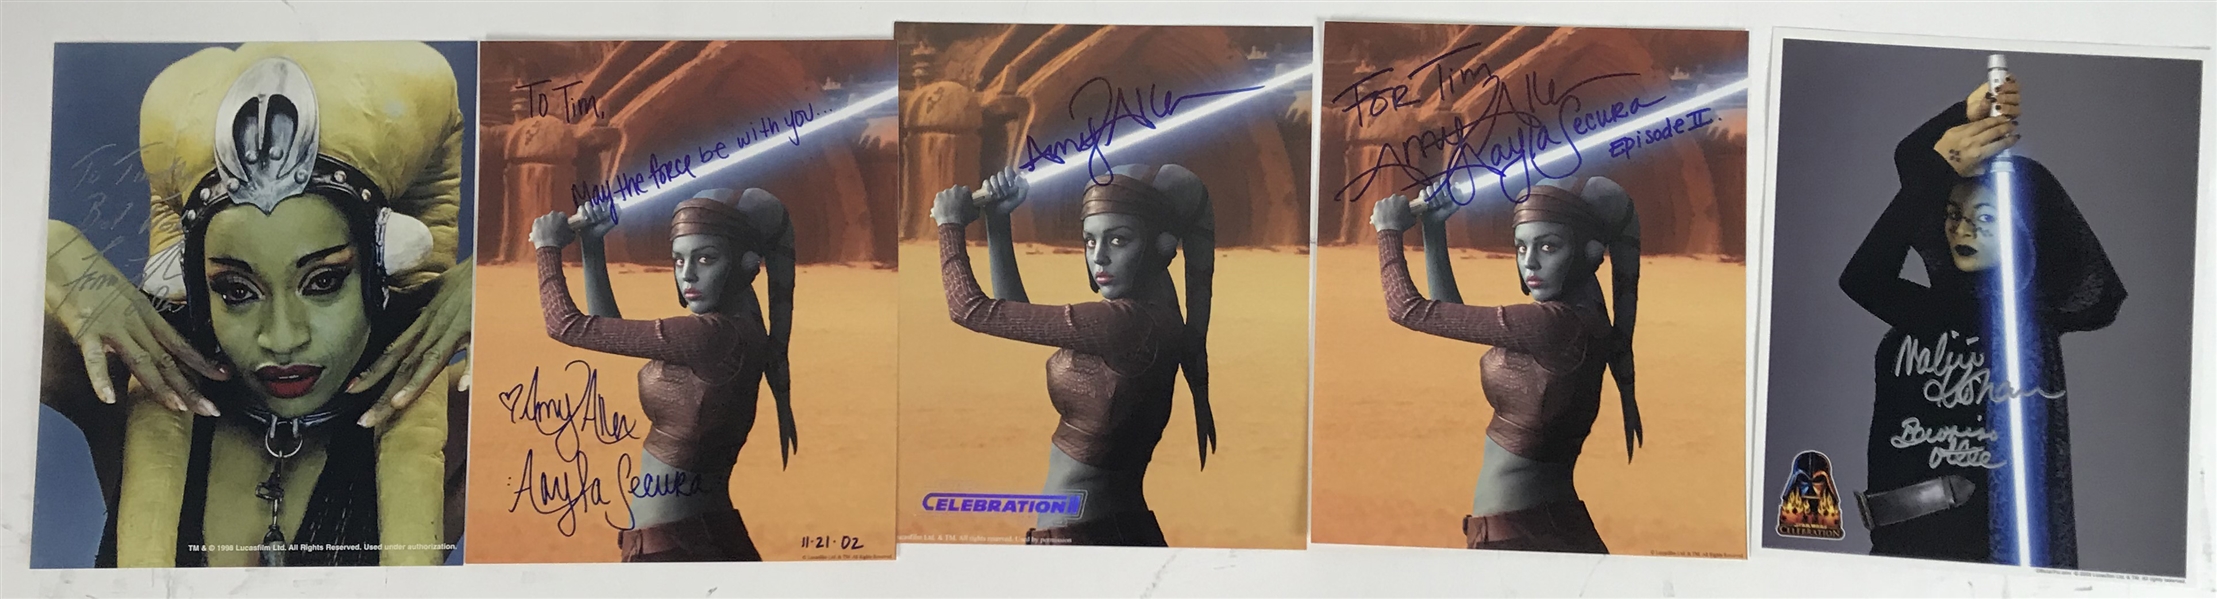 Woman Of Star Wars Lot of Ten (10) Signed 8" x 10" Color Photographs (Beckett/BAS Guaranteed)